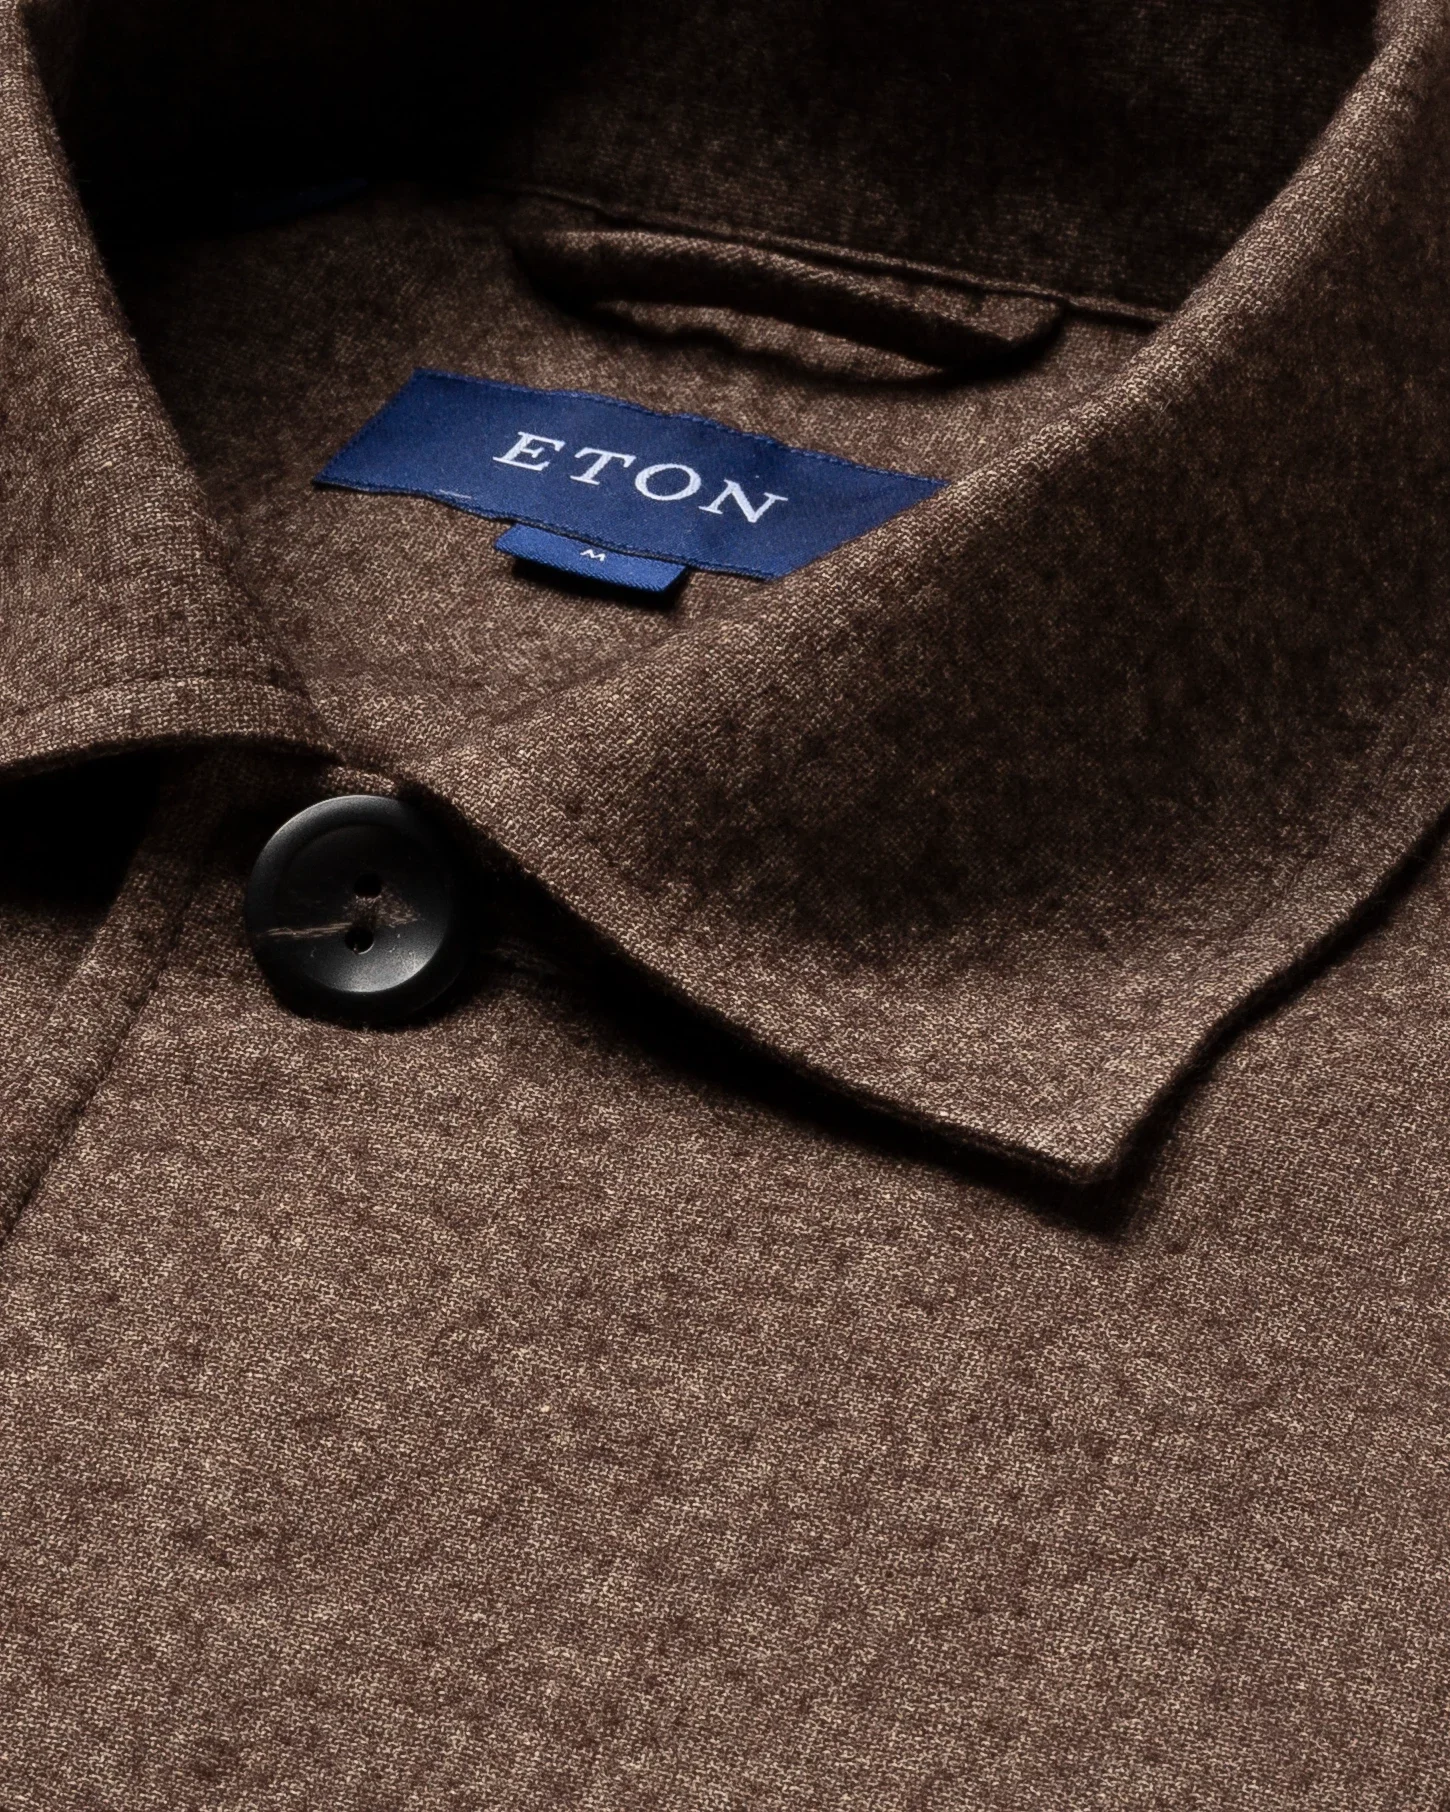 Eton - brown cotton wool cashmere overshirt turn down single cuff pointed strap regular